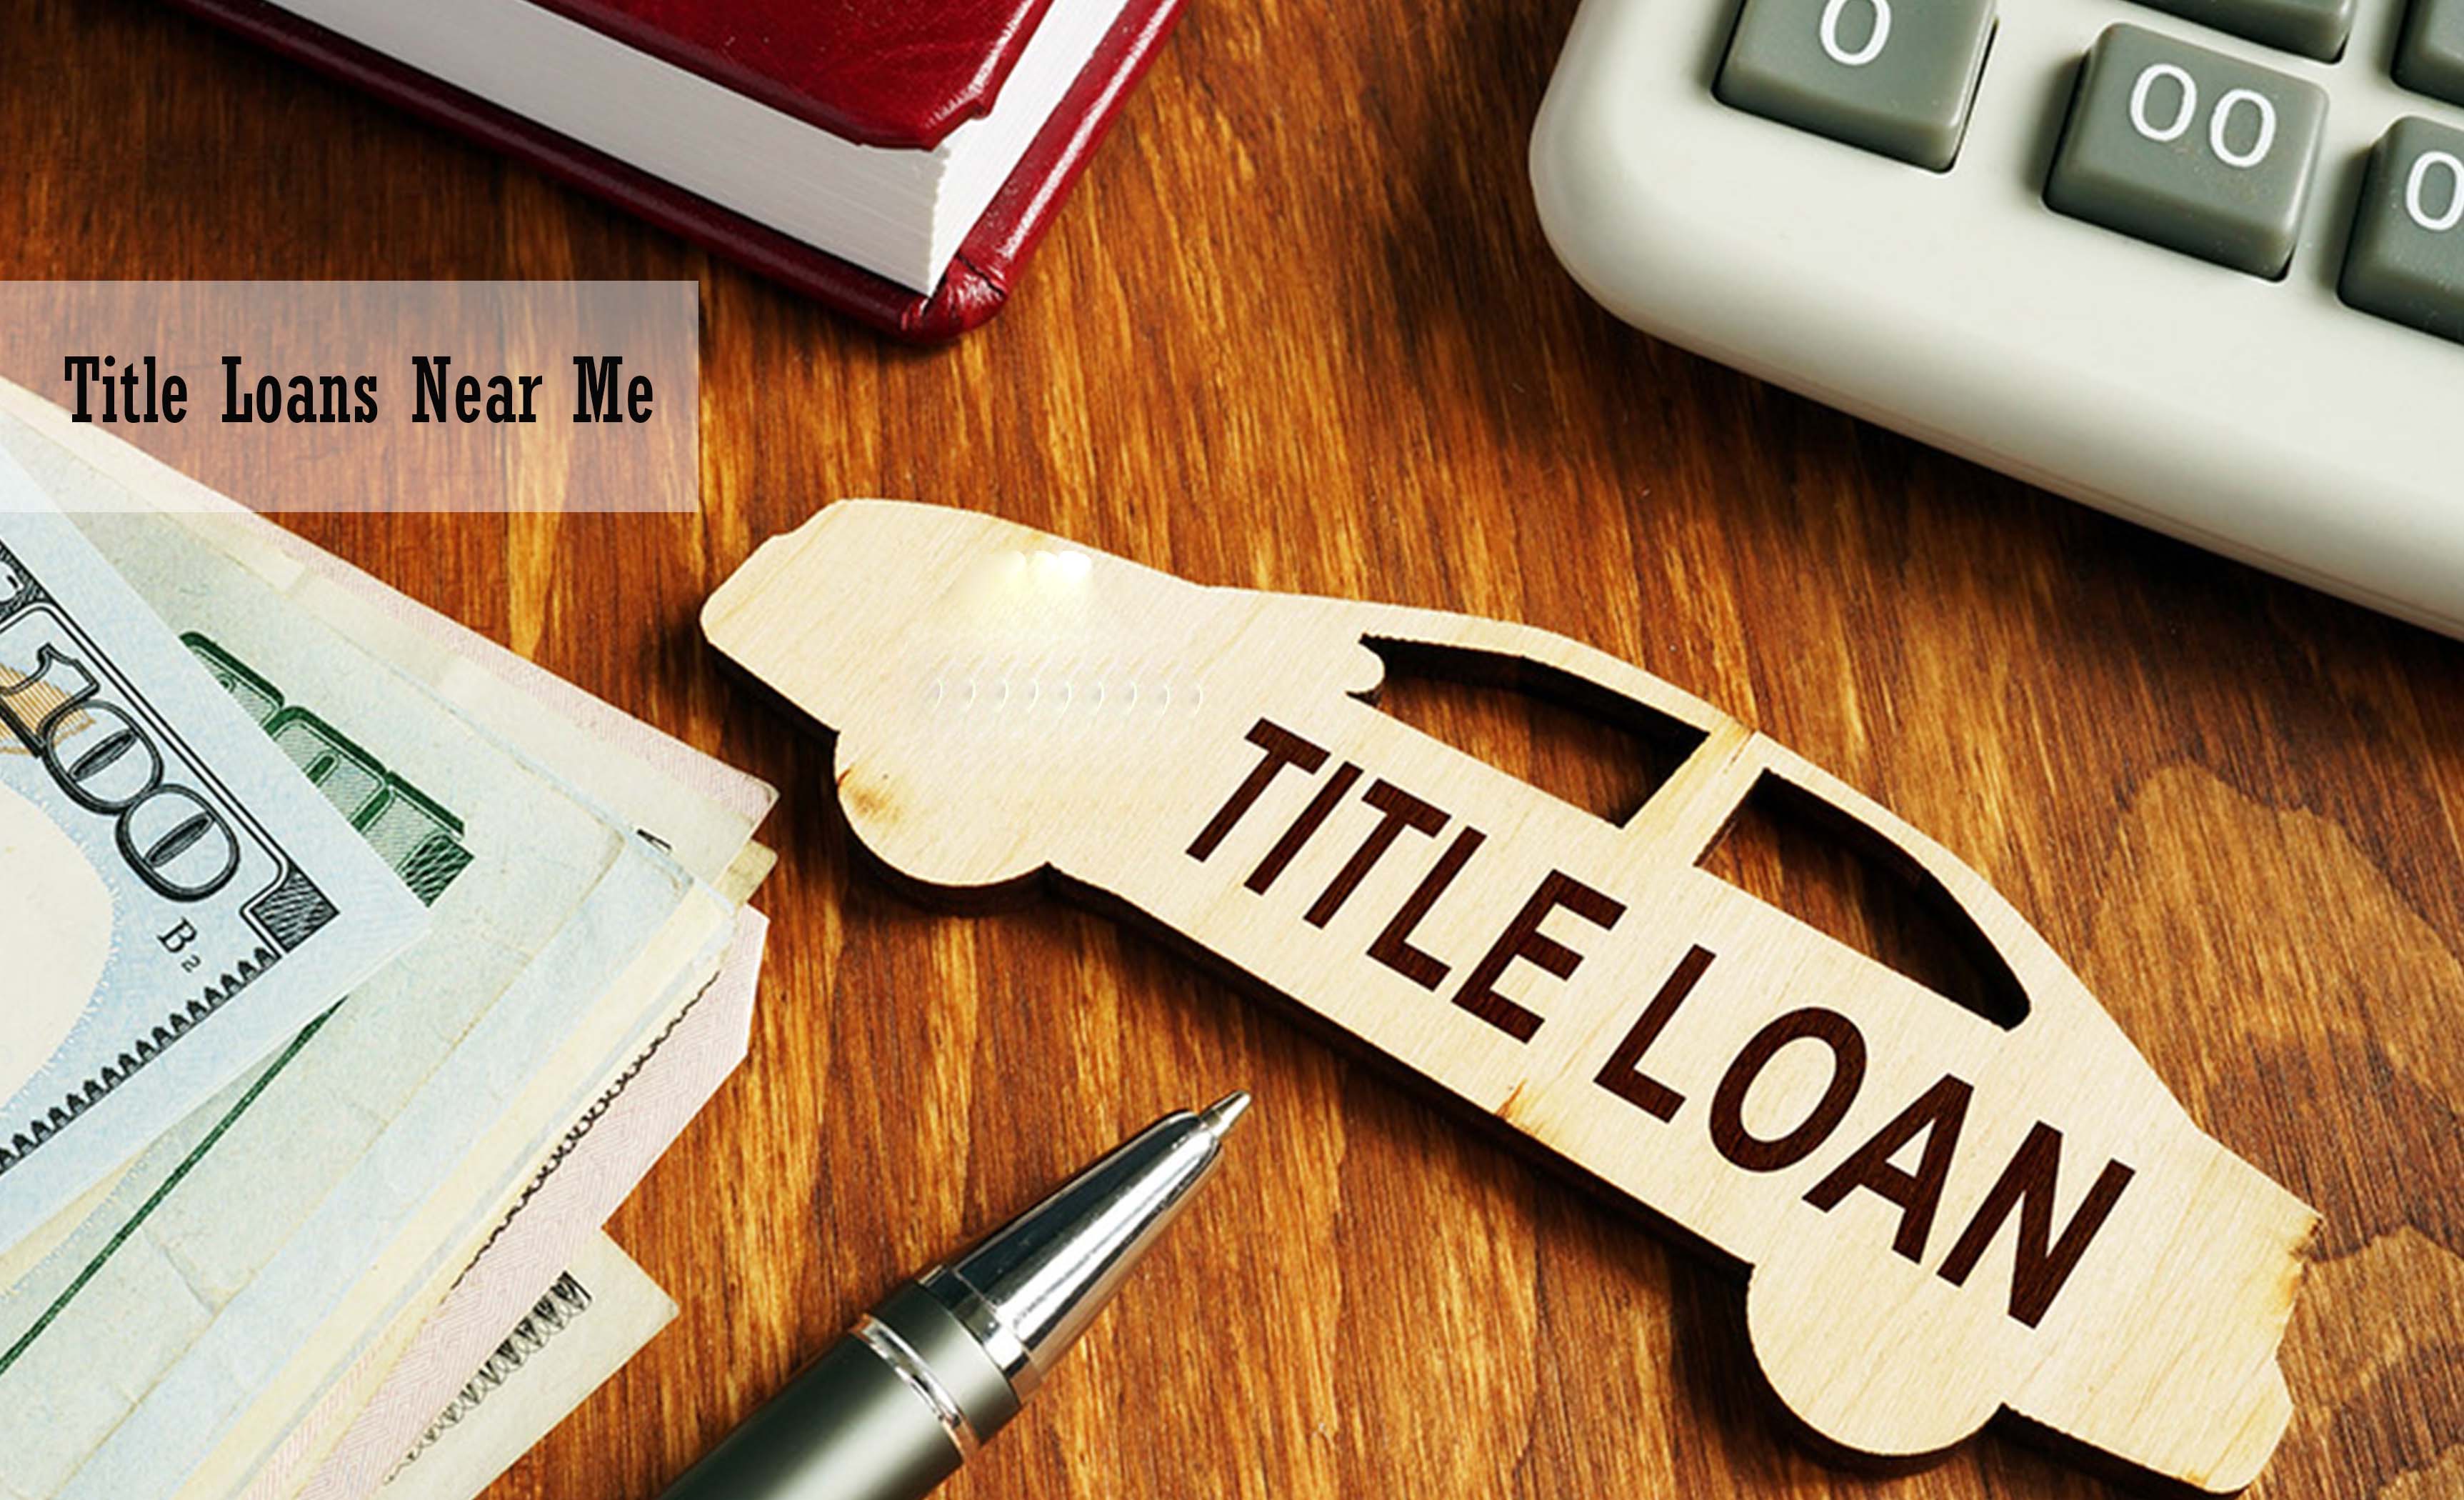 Title Loans Near Me - How Does a Title Loan Work?